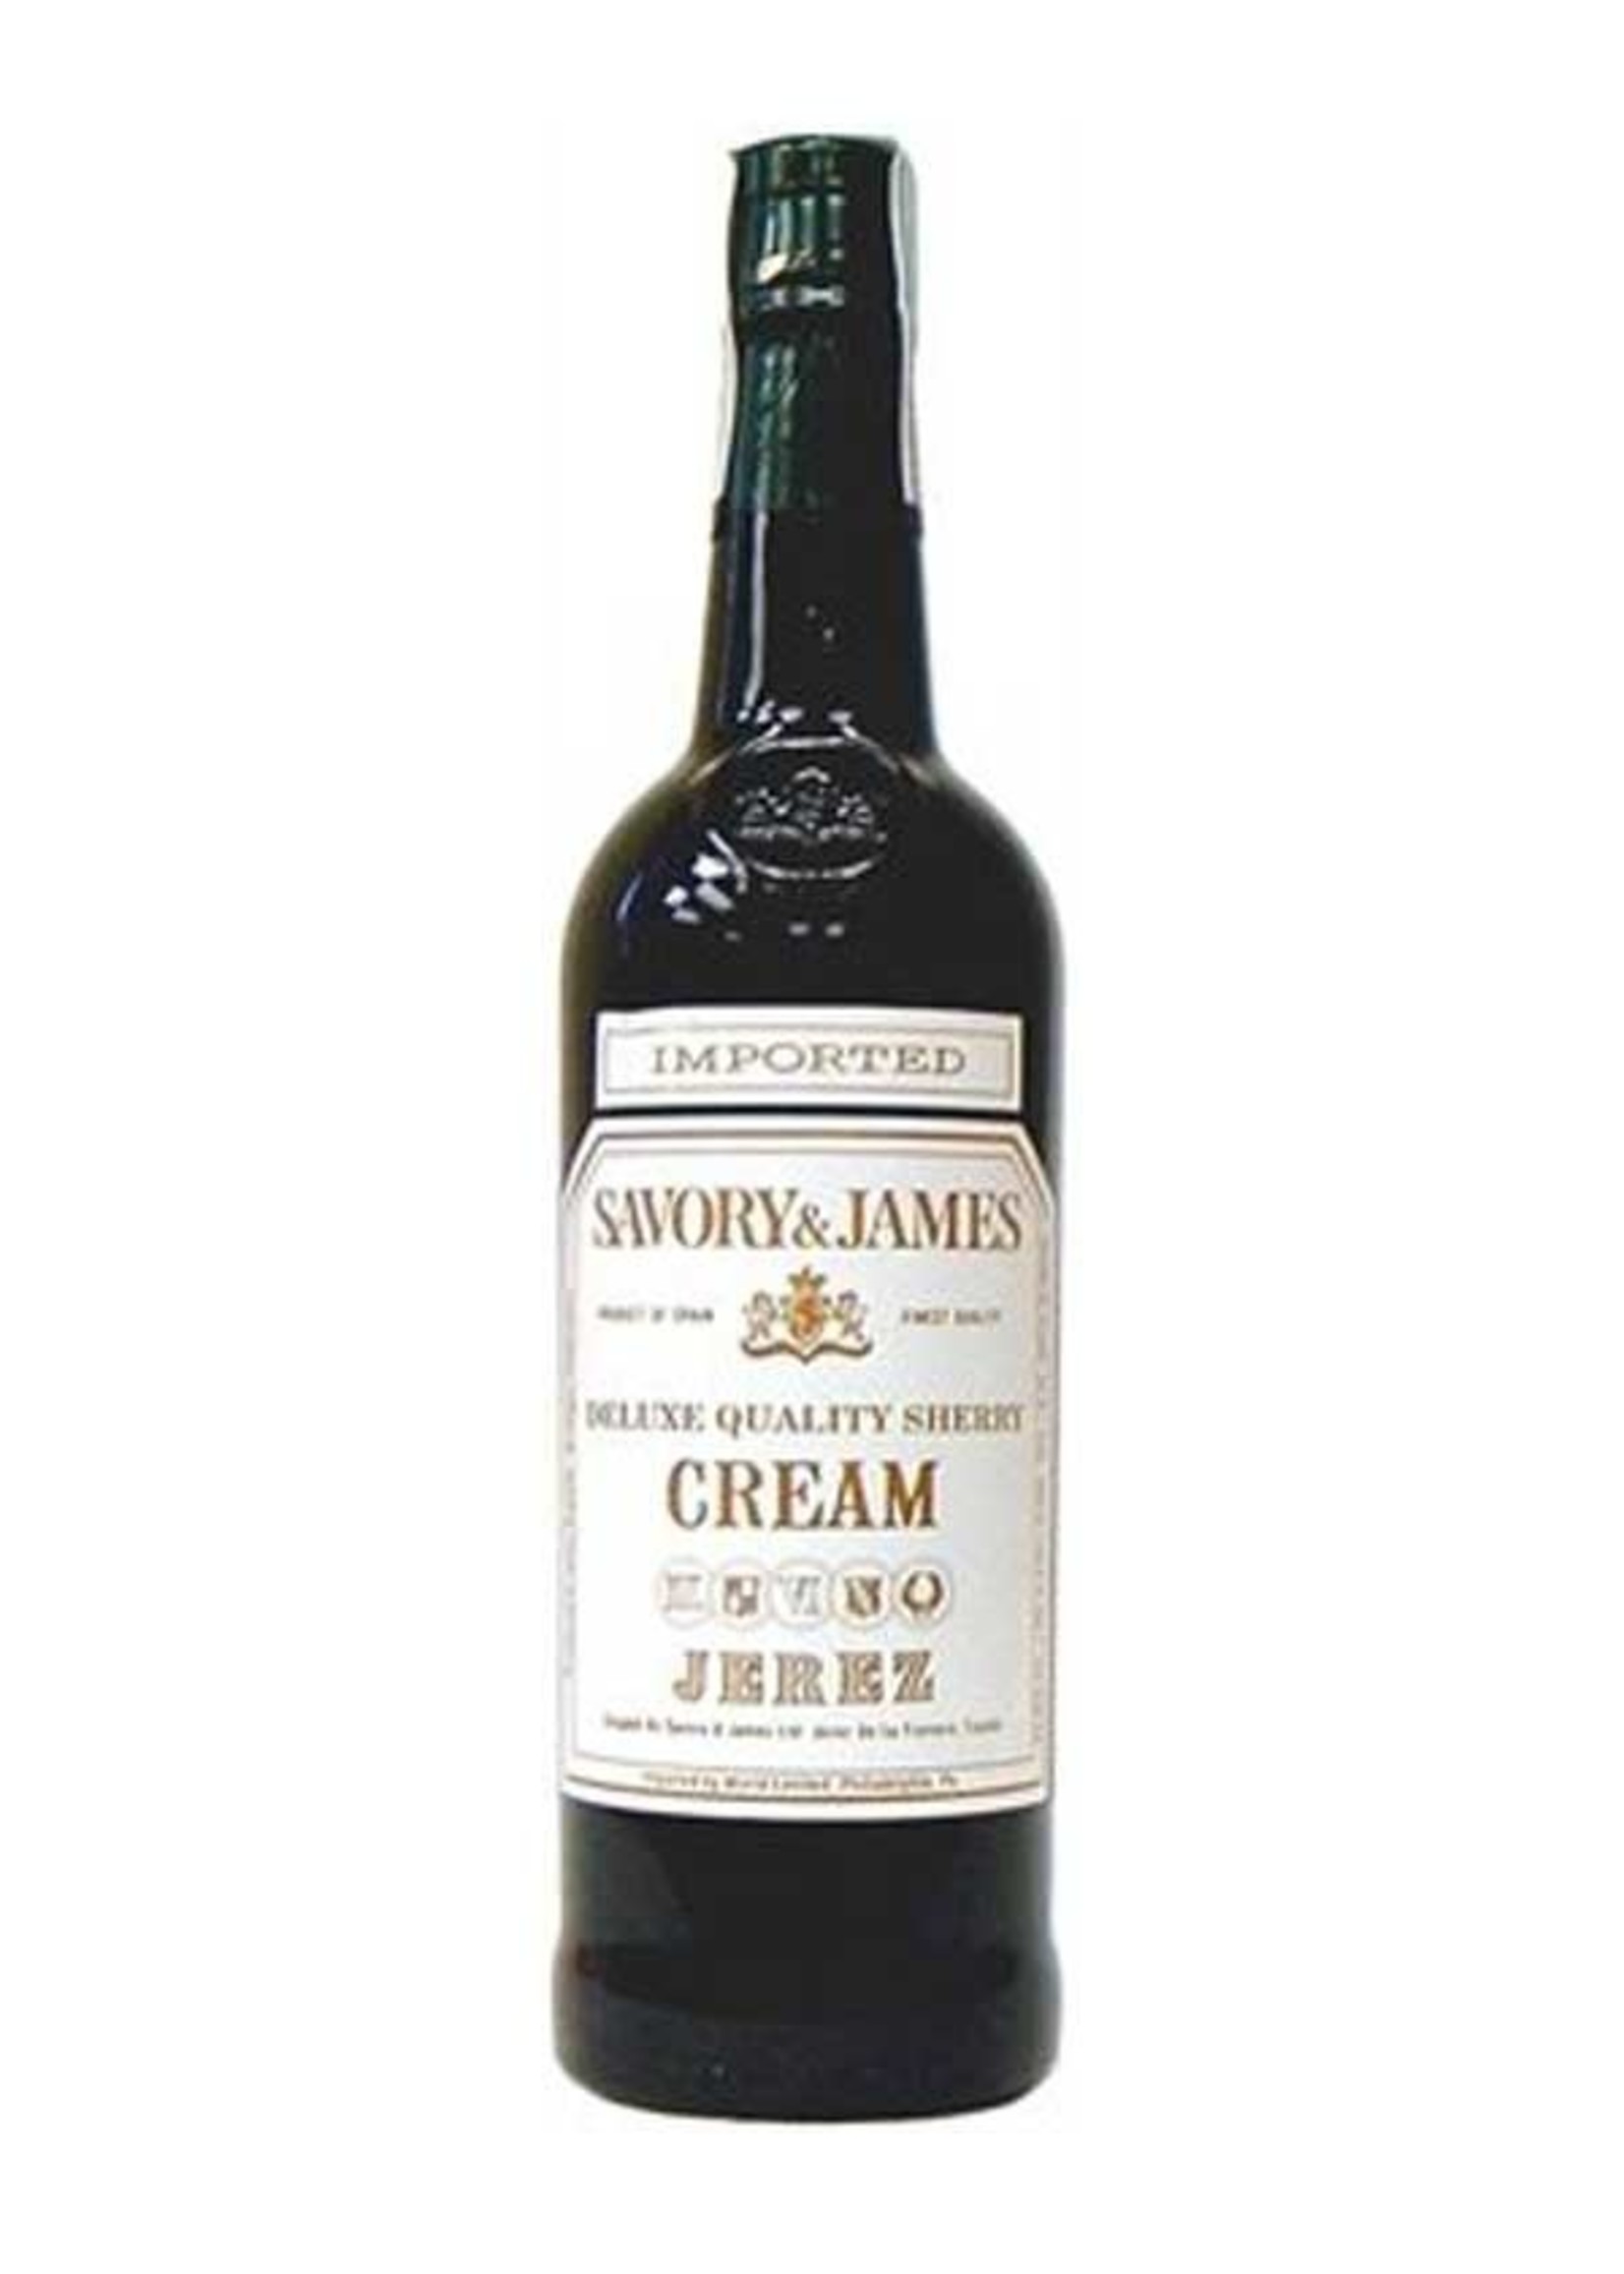 Savory & James Savory & James / Cream Sherry